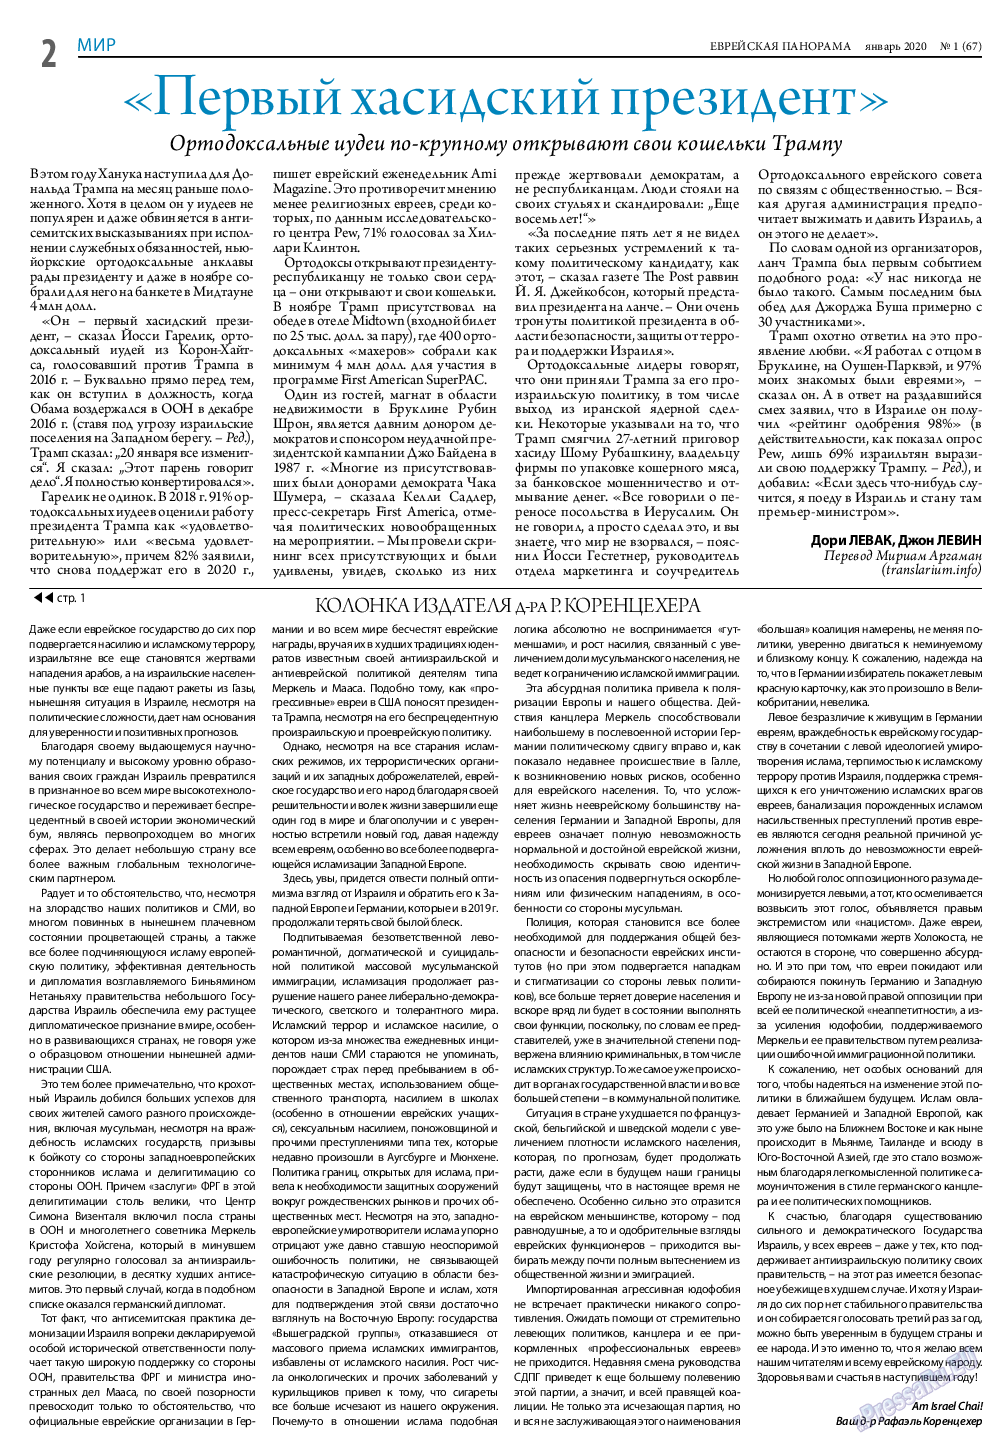 Еврейская панорама, газета. 2020 №1 стр.2